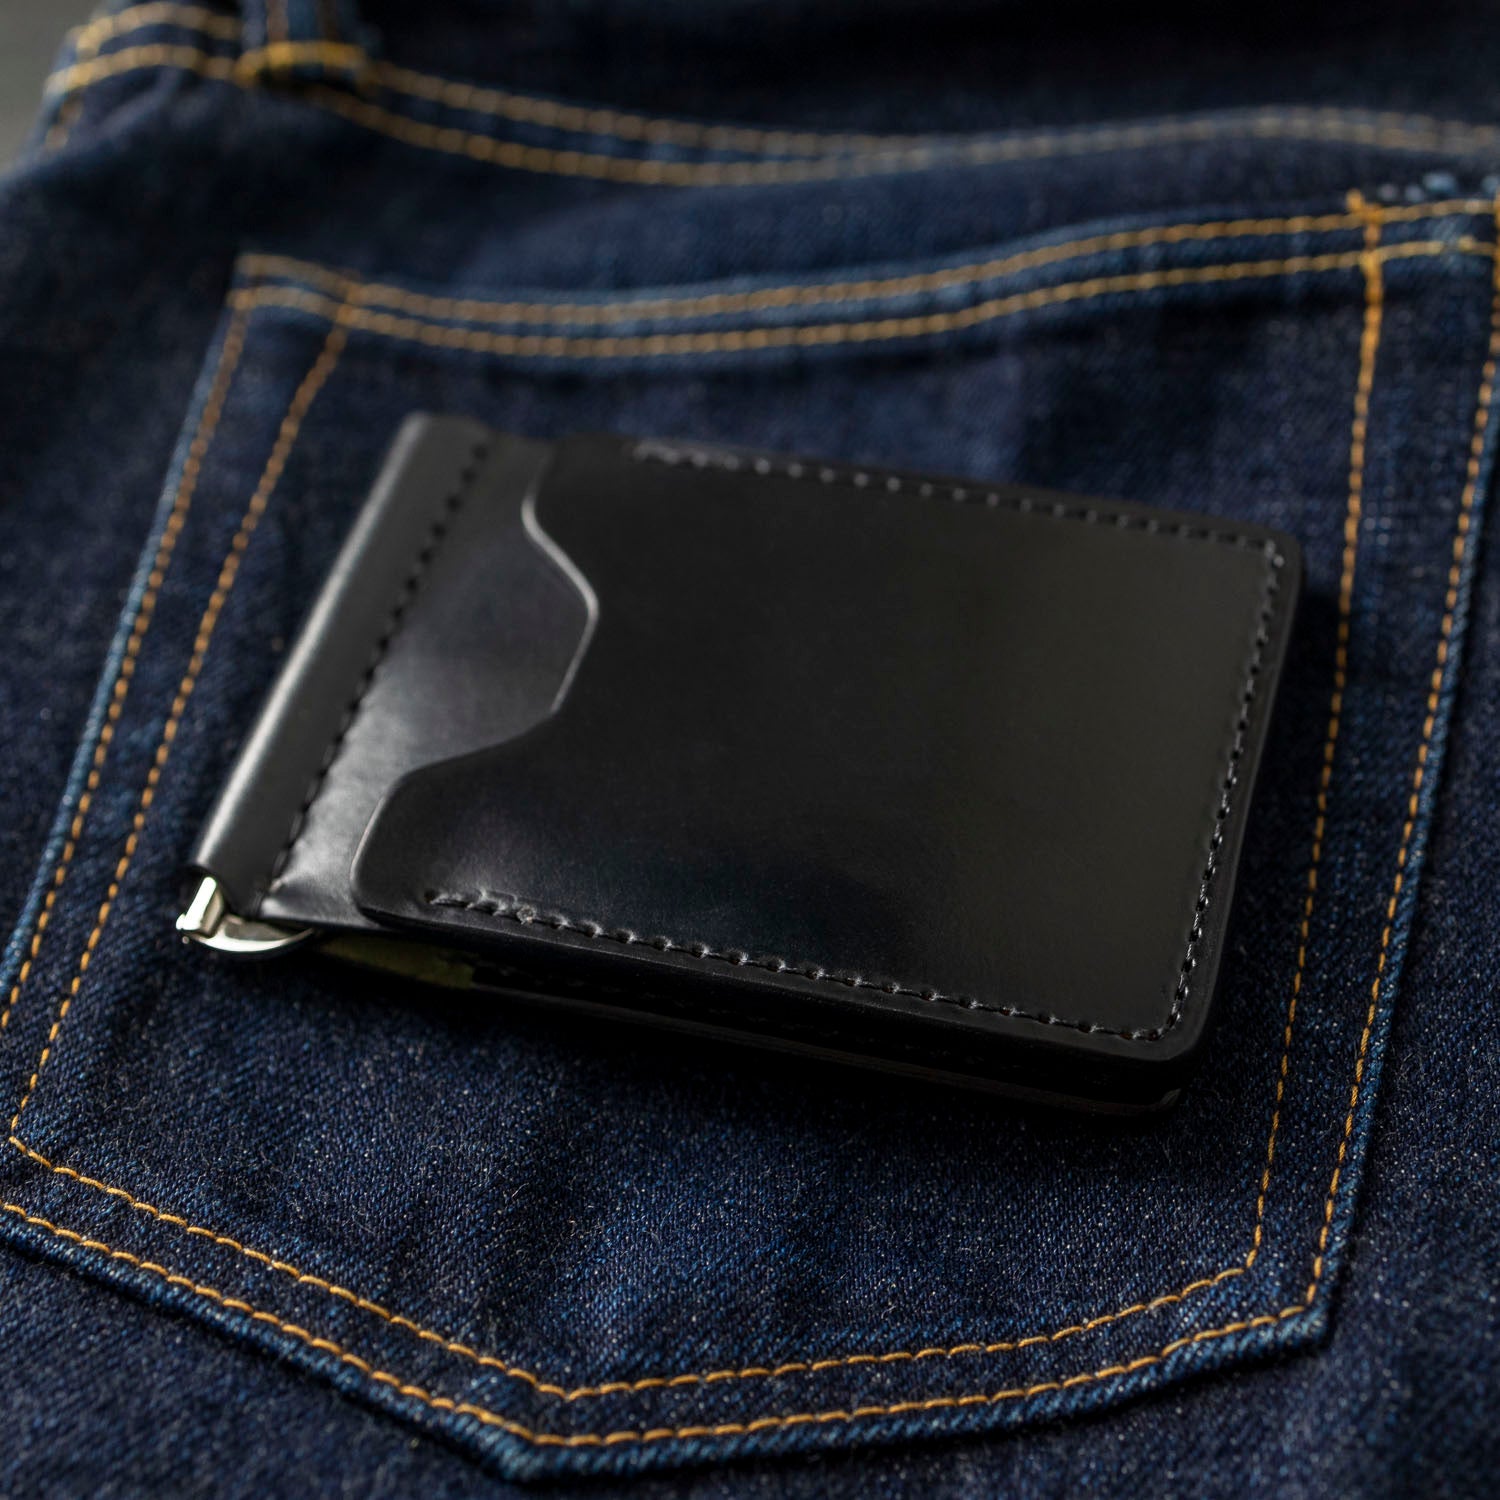 Black Leather Money Clip Wallet - Beautiful Black Horween Chromexcel, Black